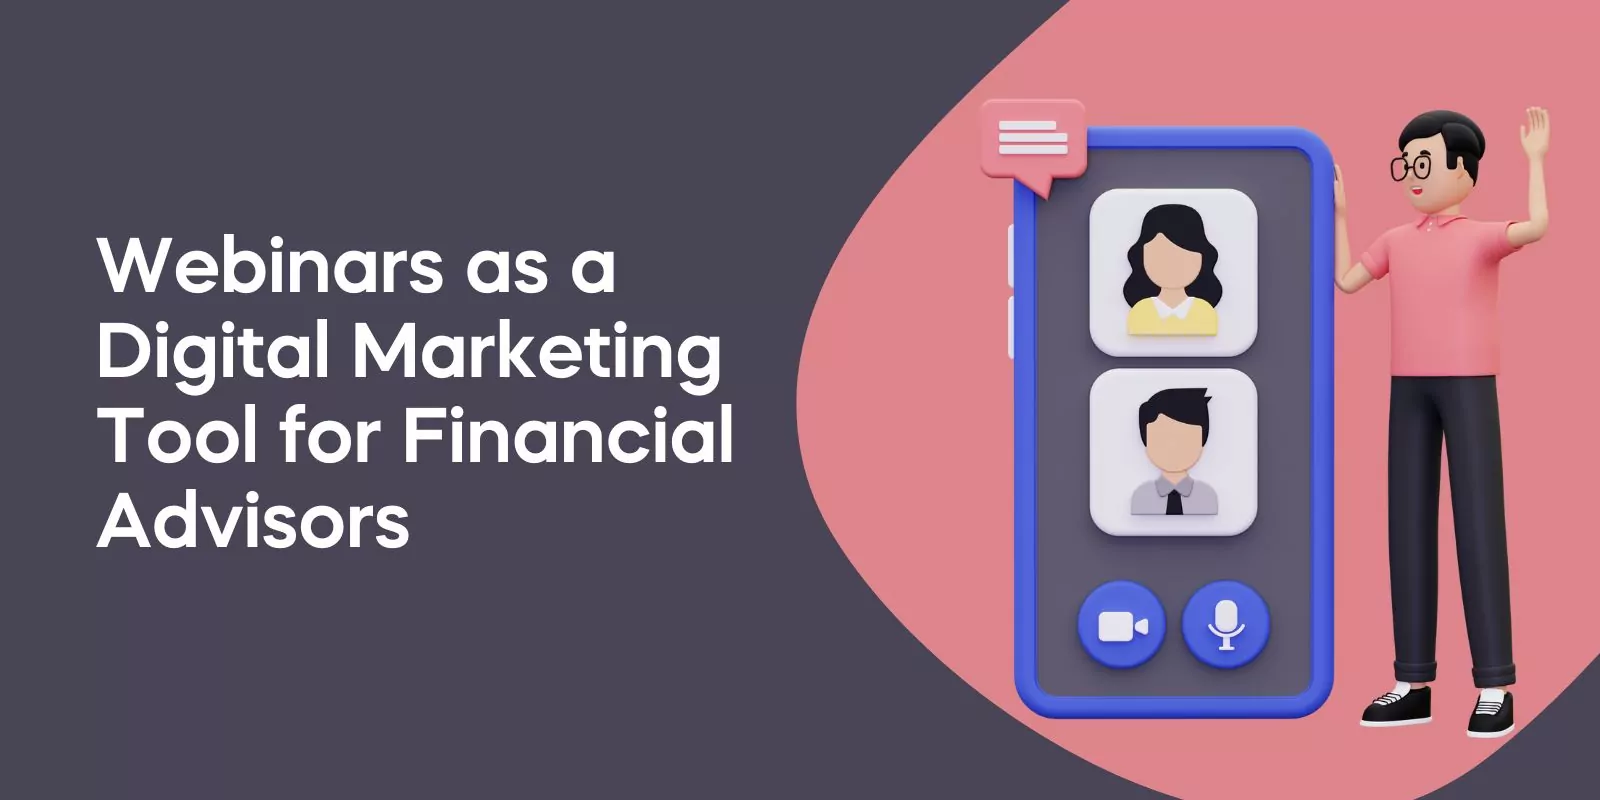 Webinars as a Digital Marketing Tool for Financial Advisors